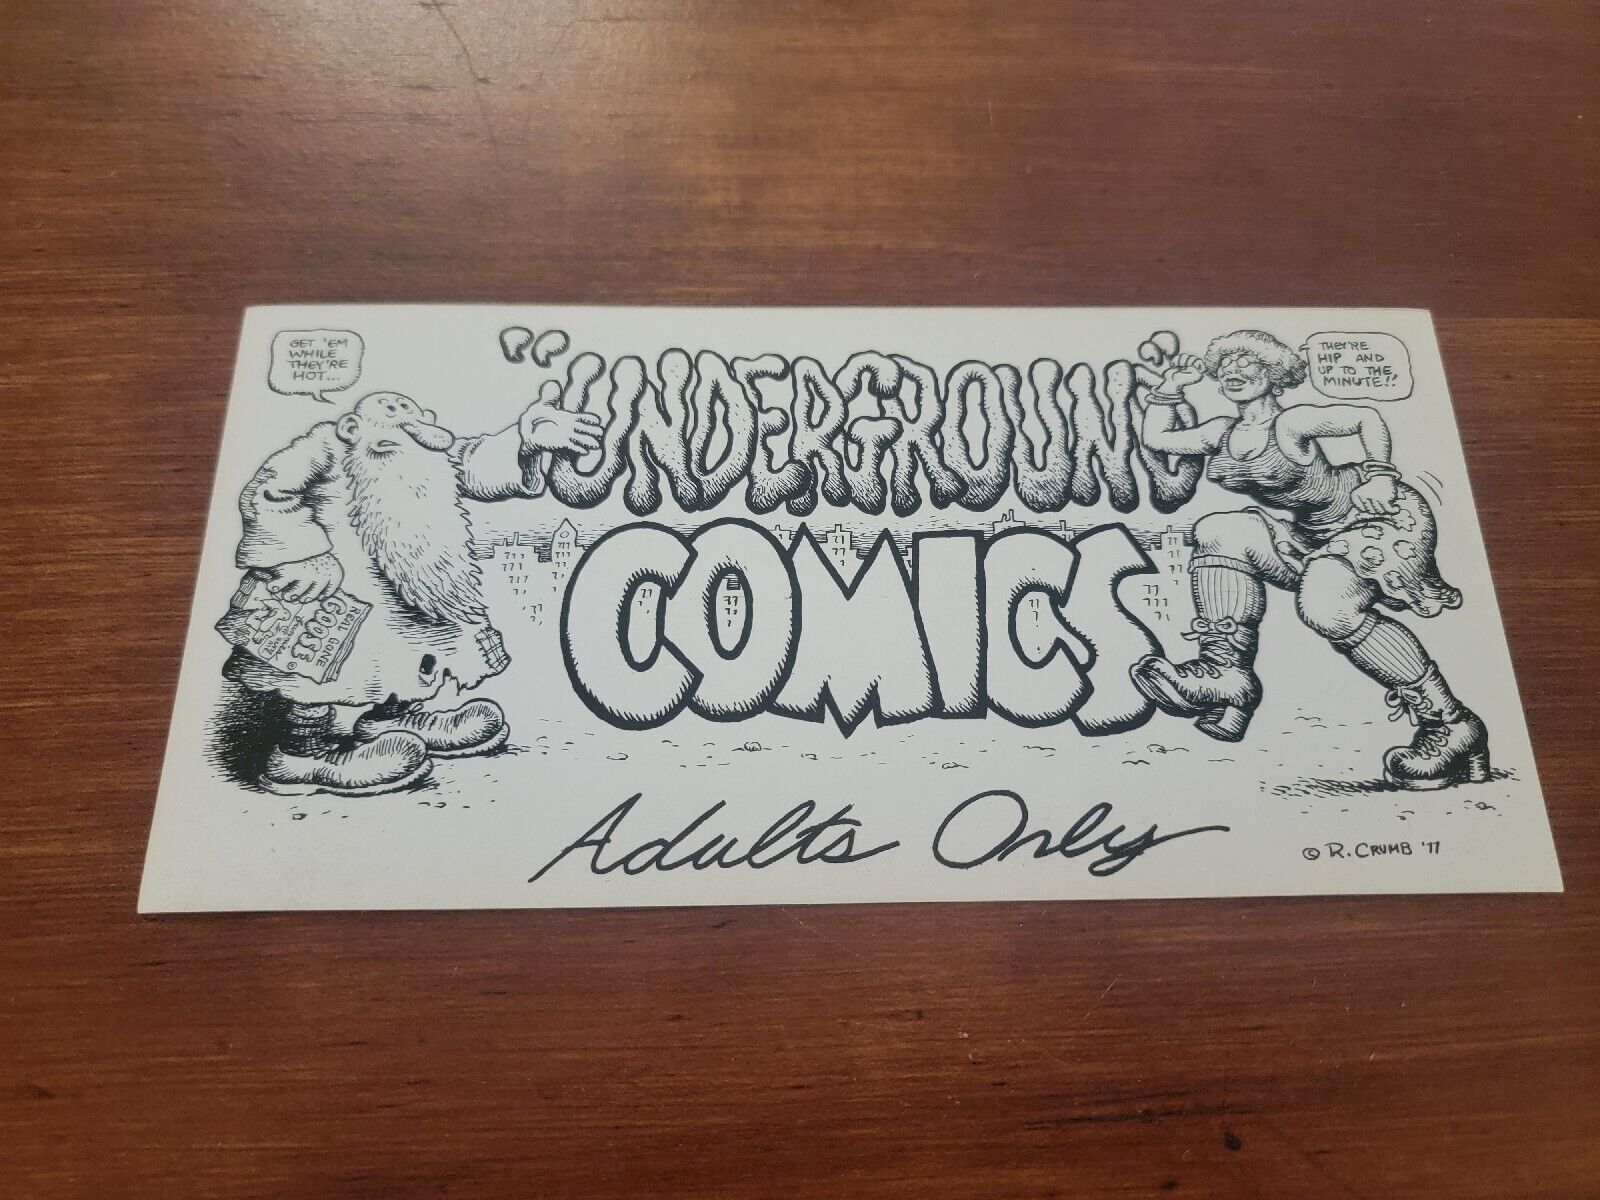 Rare 1977 Underground Comics Robert R. Crumb Decal Bumper Sticker Unused Comix